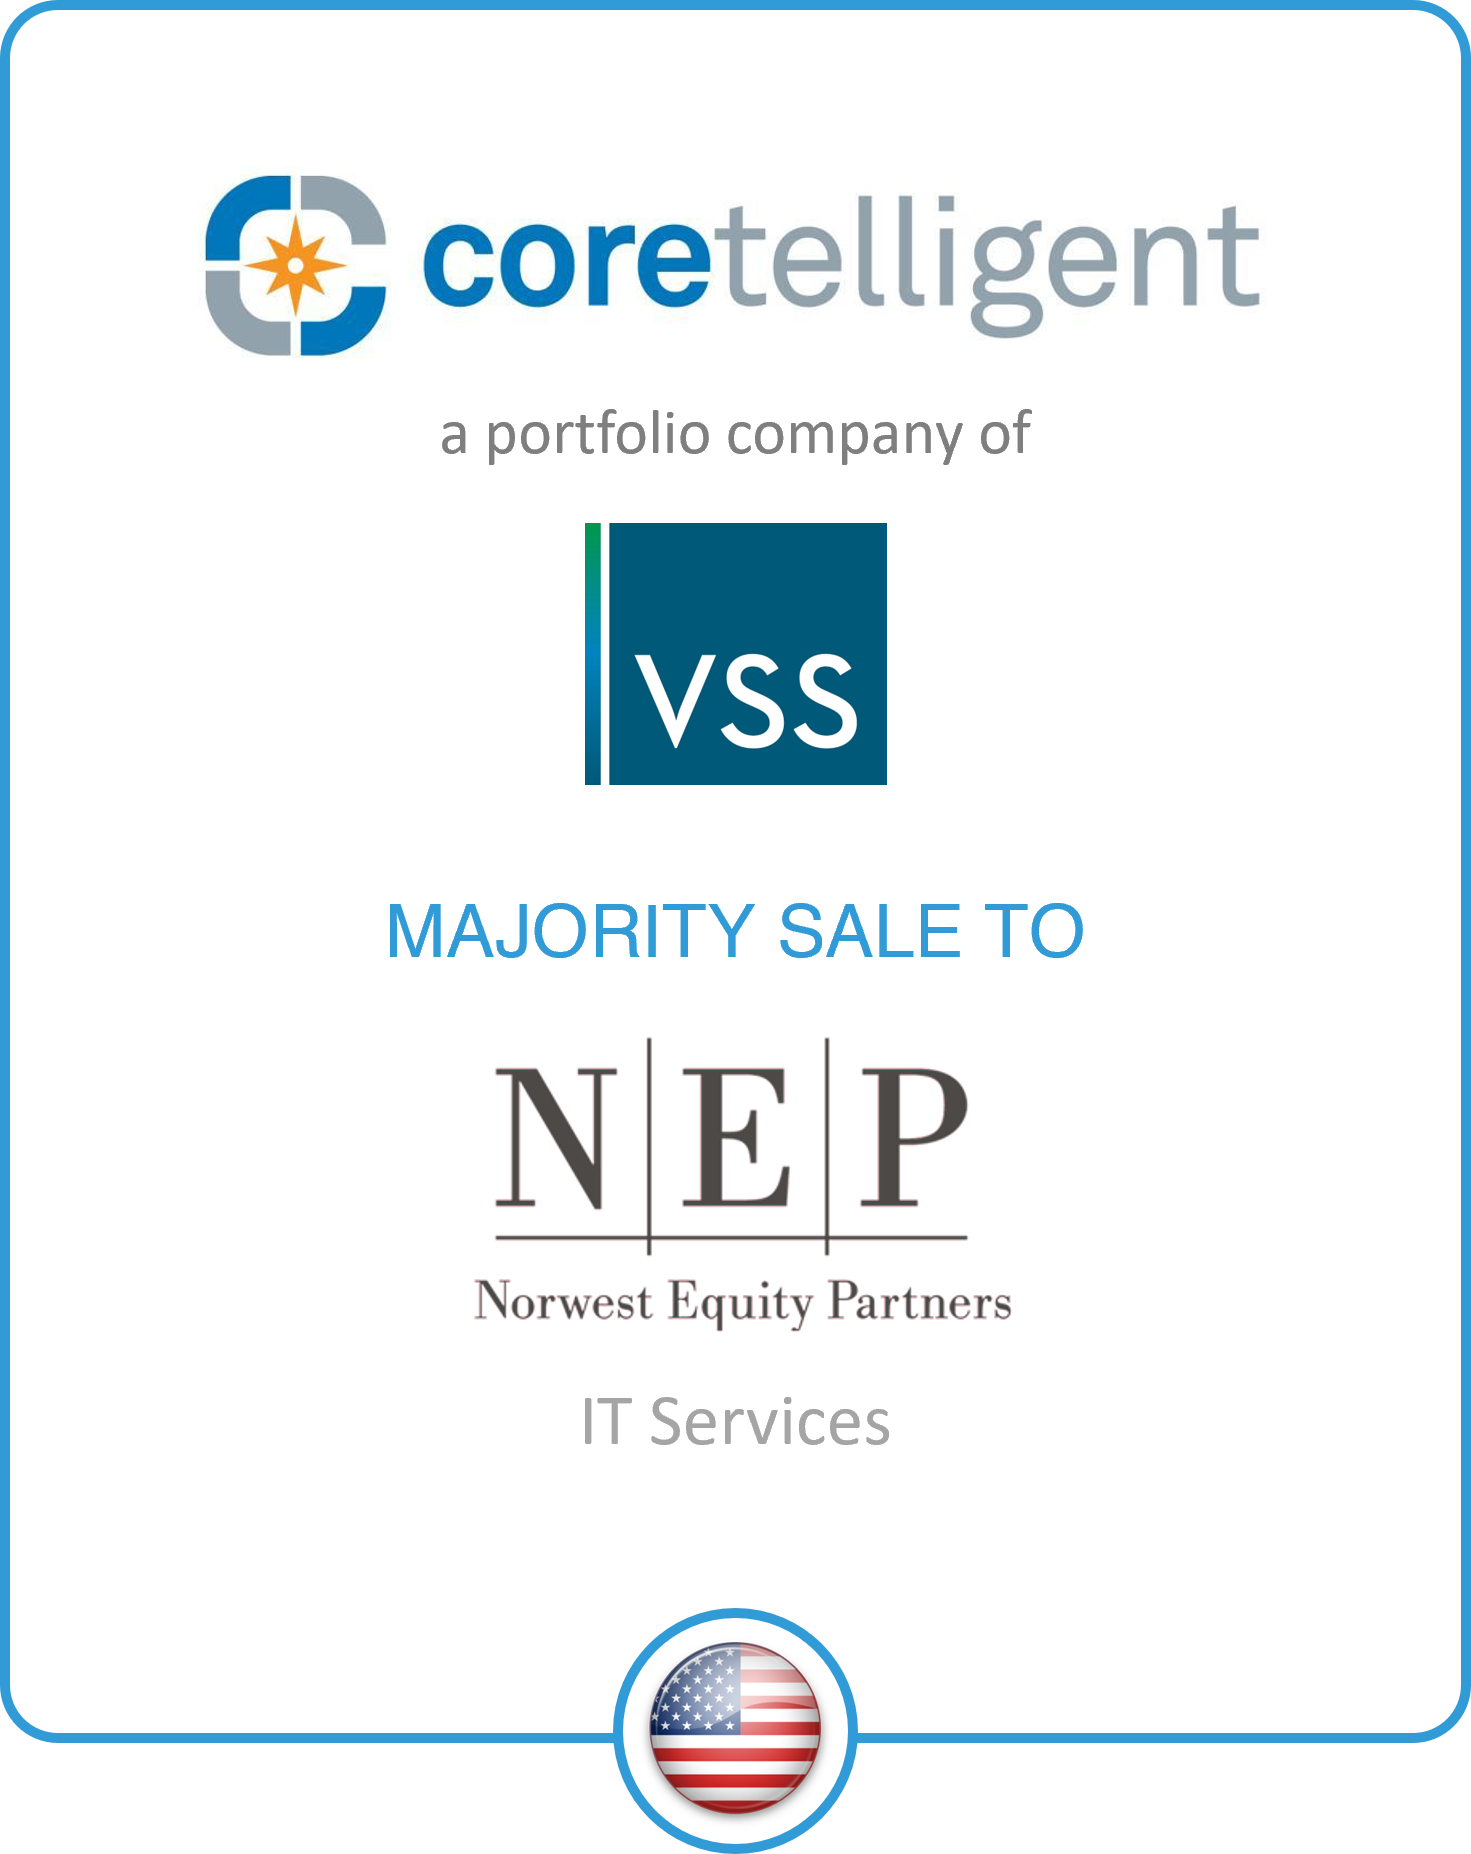 Drake Star Advises Coretelligent, a Portfolio Company of VSS, on its Sale to NEP